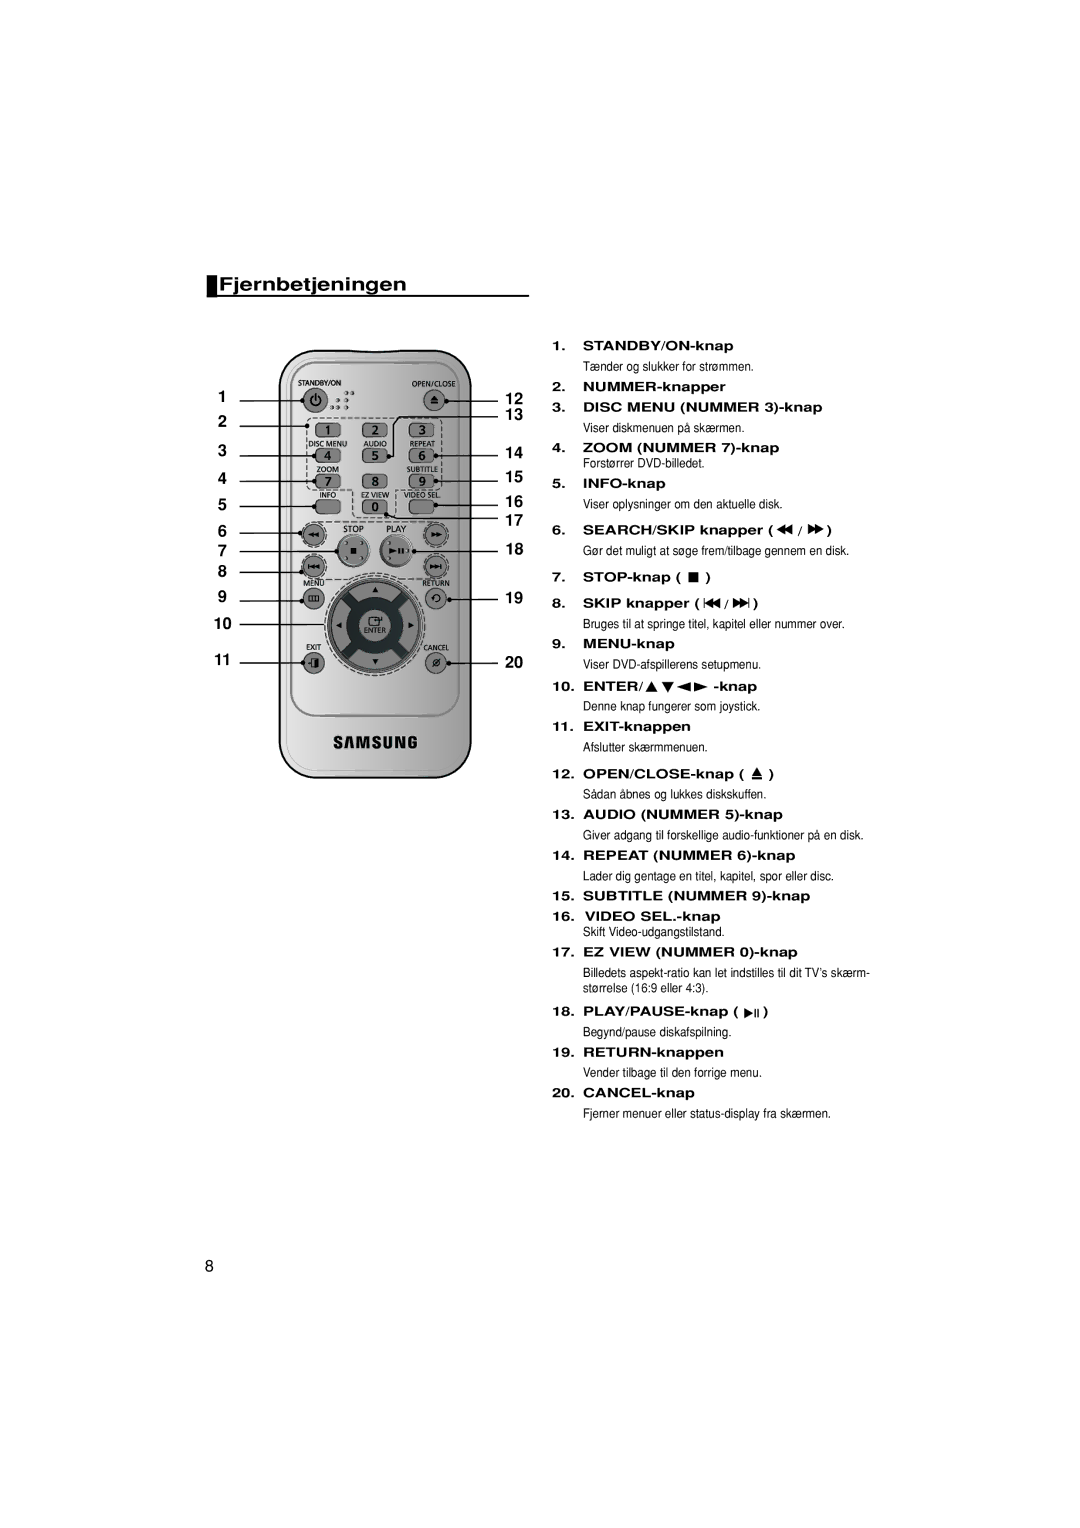 Samsung DVD-F1080/XEE Fjernbetjeningen, MENU-knap, ENTER/ -knap Denne knap fungerer som joystick, Repeat Nummer 6-knap 